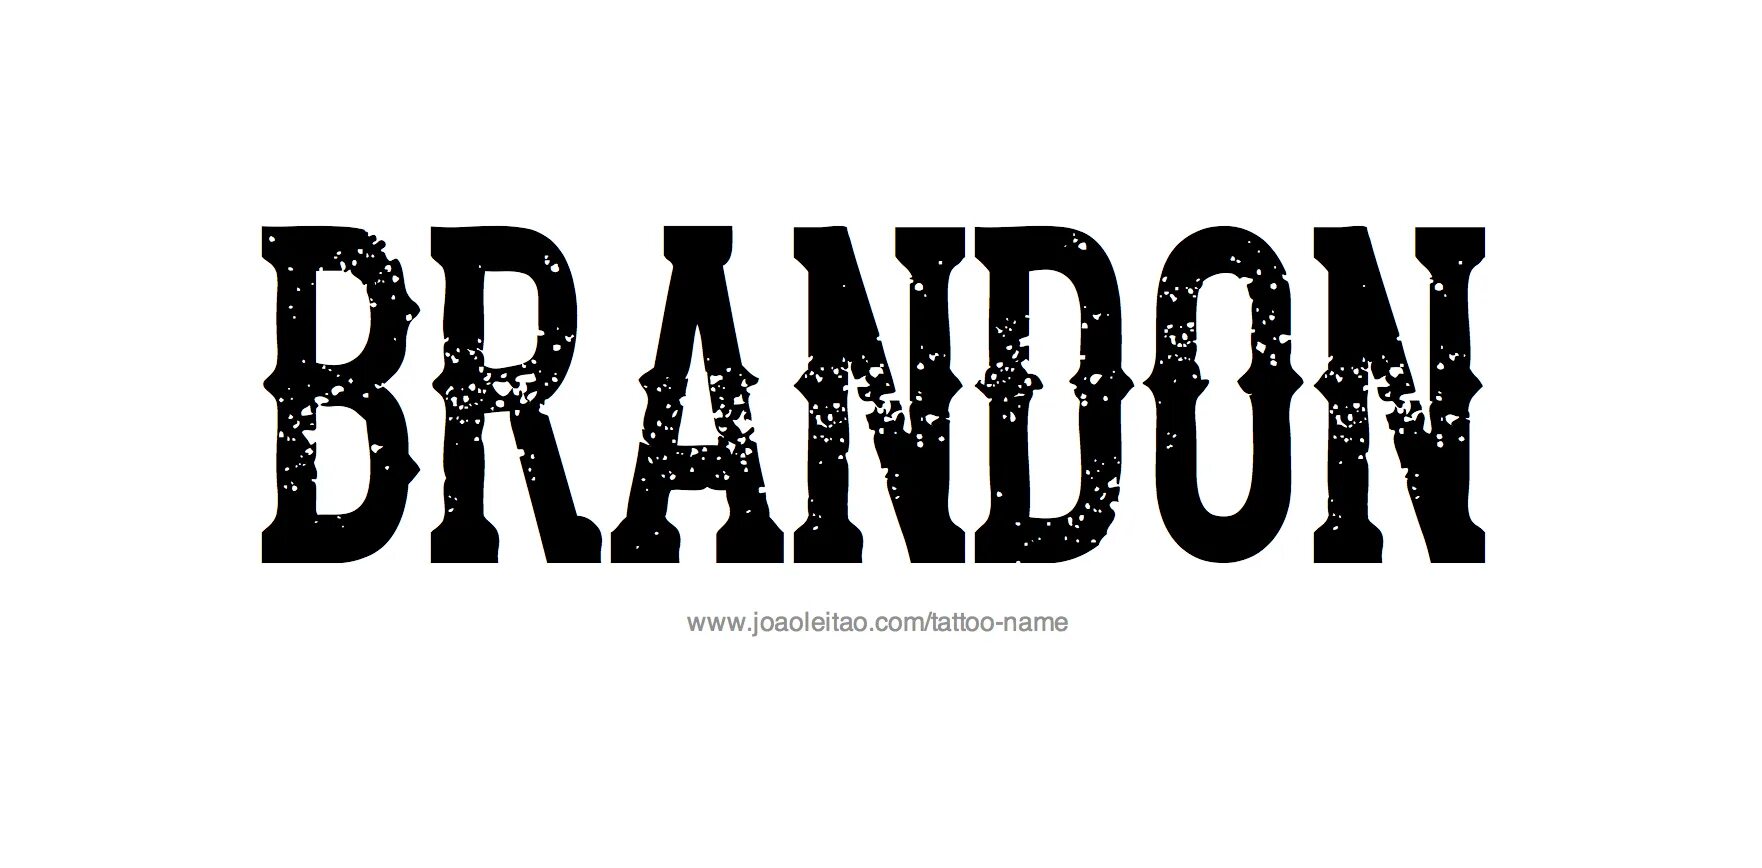 Name c he. Lets go Brandon. Brandon logo. Lets go Brendоn. Let's go Brandon картинки.